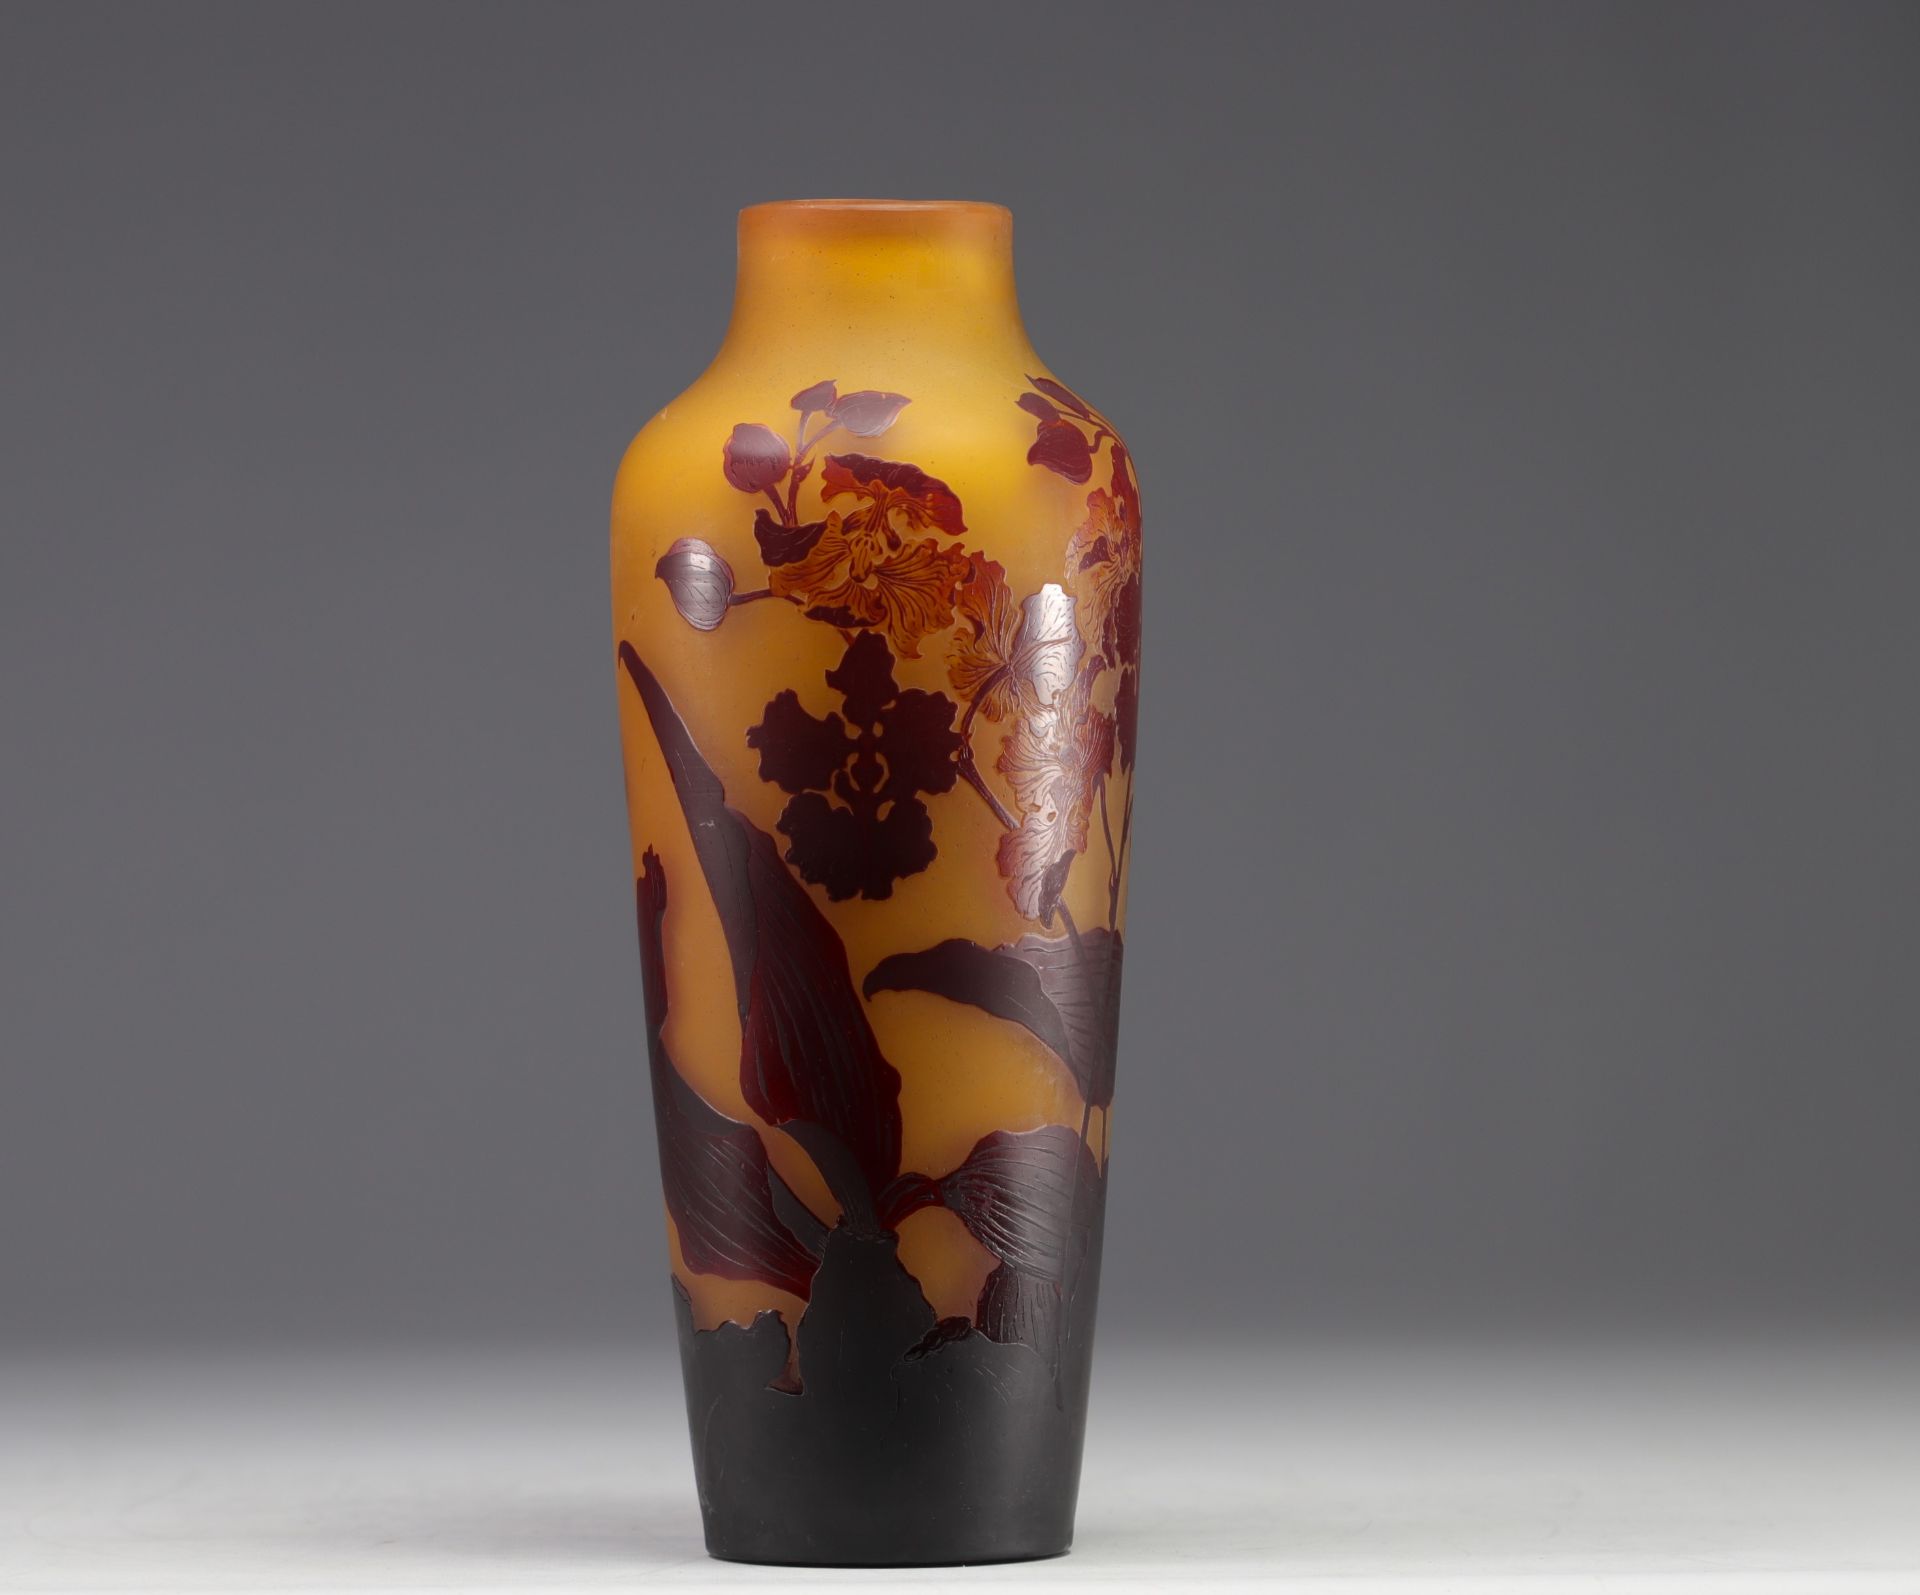 Emile GALLE - Multi-layered glass vase with iris design, signed. - Image 3 of 5